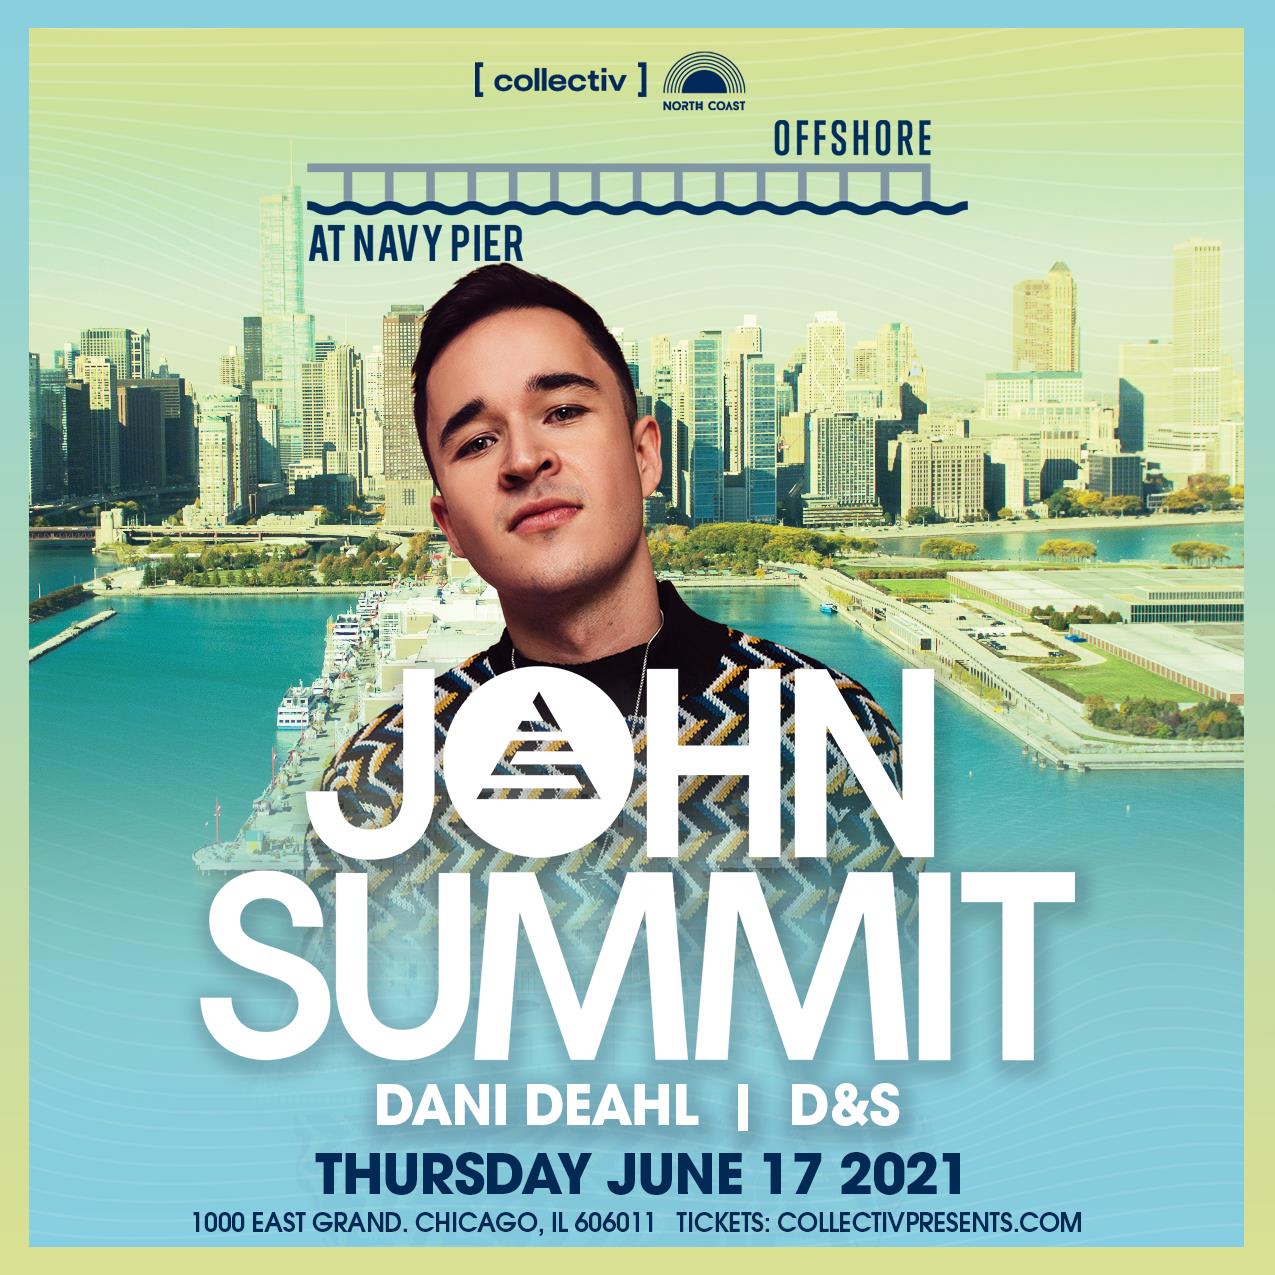 Buy Tickets to John Summit in Chicago on Jun 17, 2021